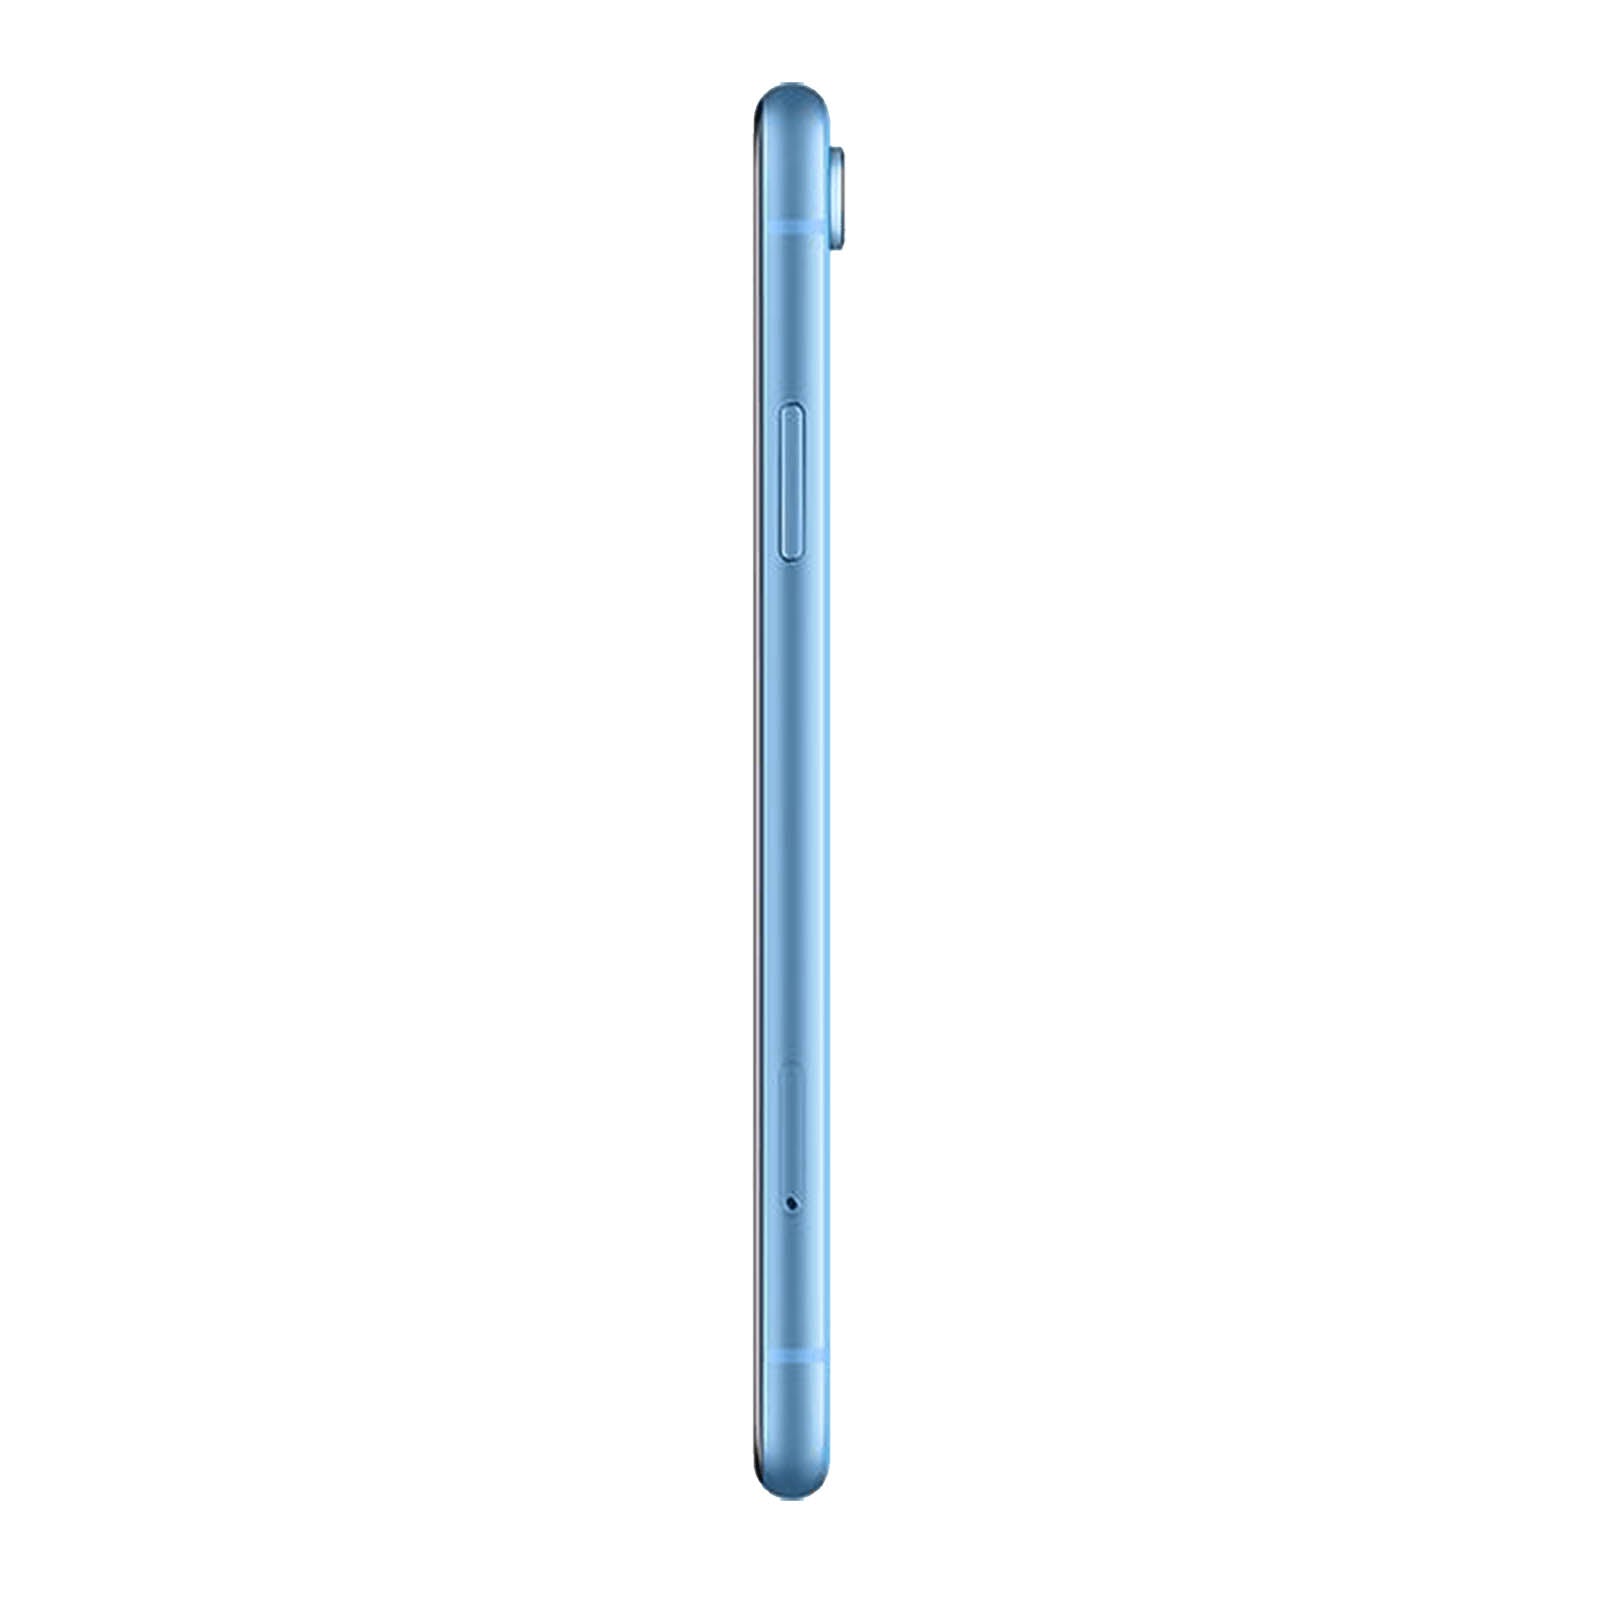 Apple iPhone XR 64GB Blue Good - Unlocked